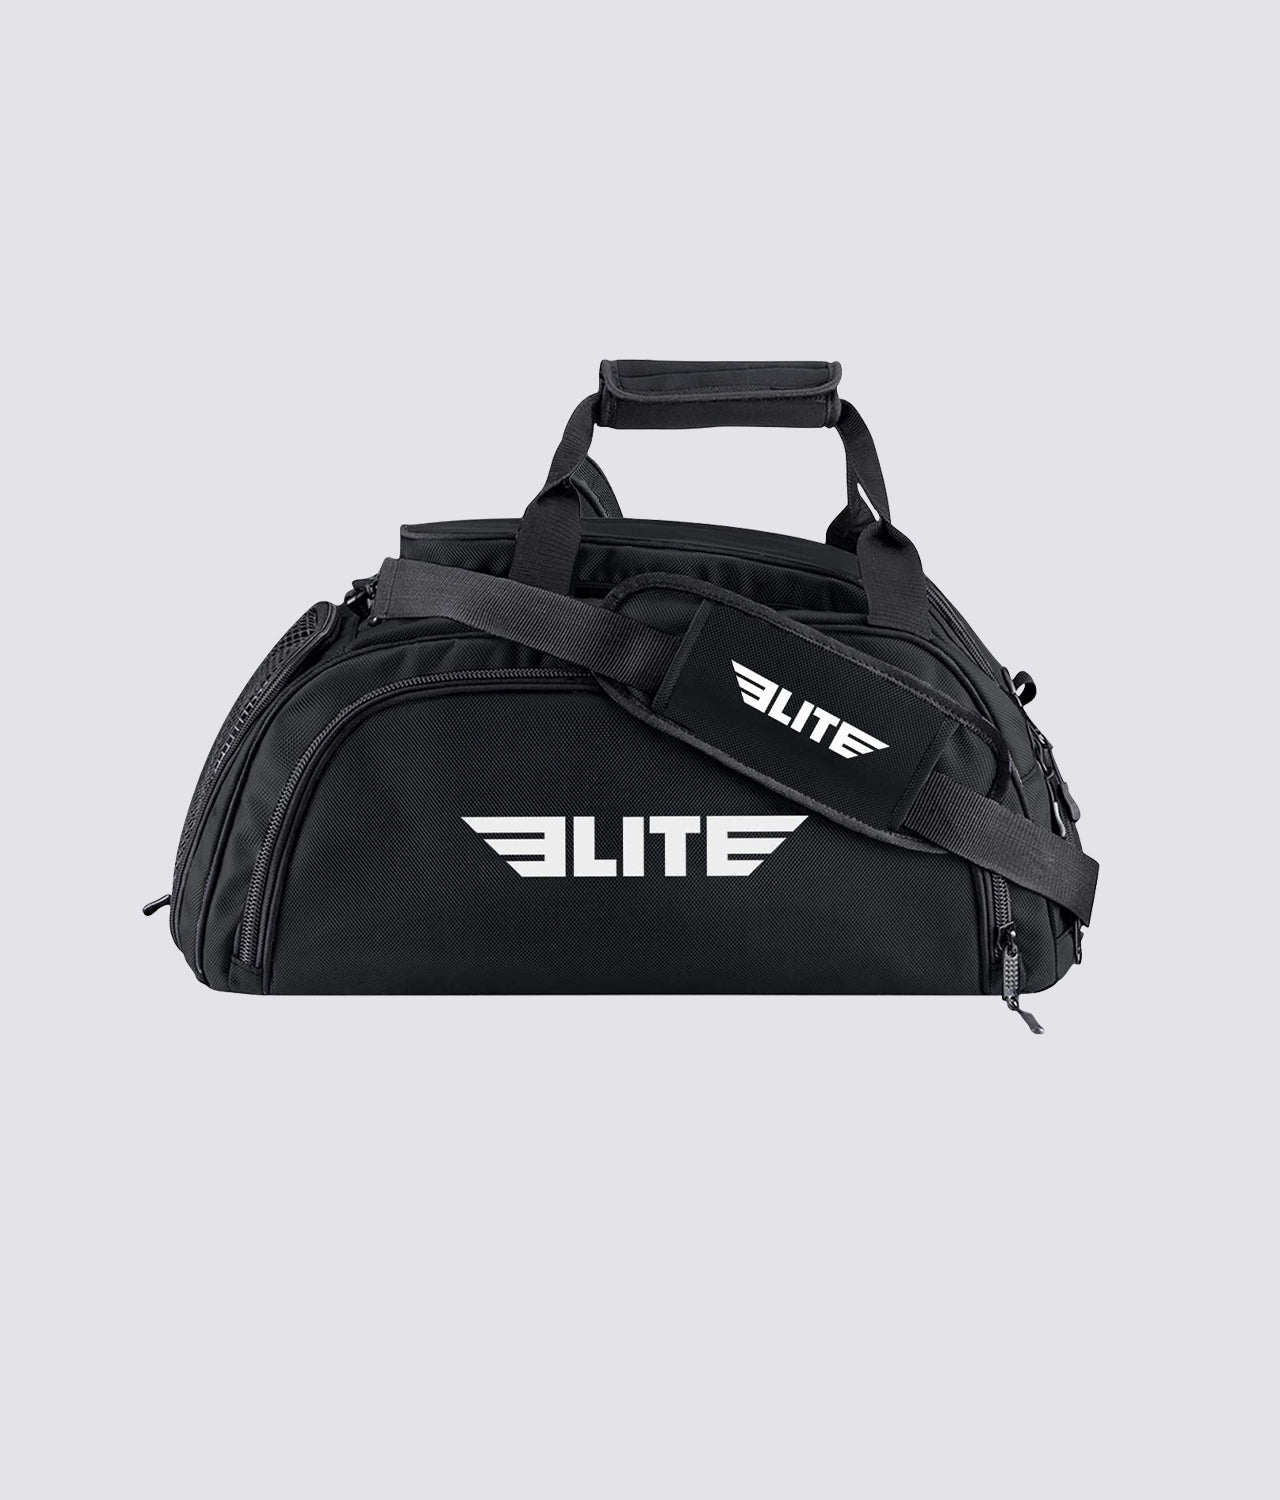 Elite Sports Warrior Black Large Duffel Jiu Jitsu BJJ Gear Gym Bag